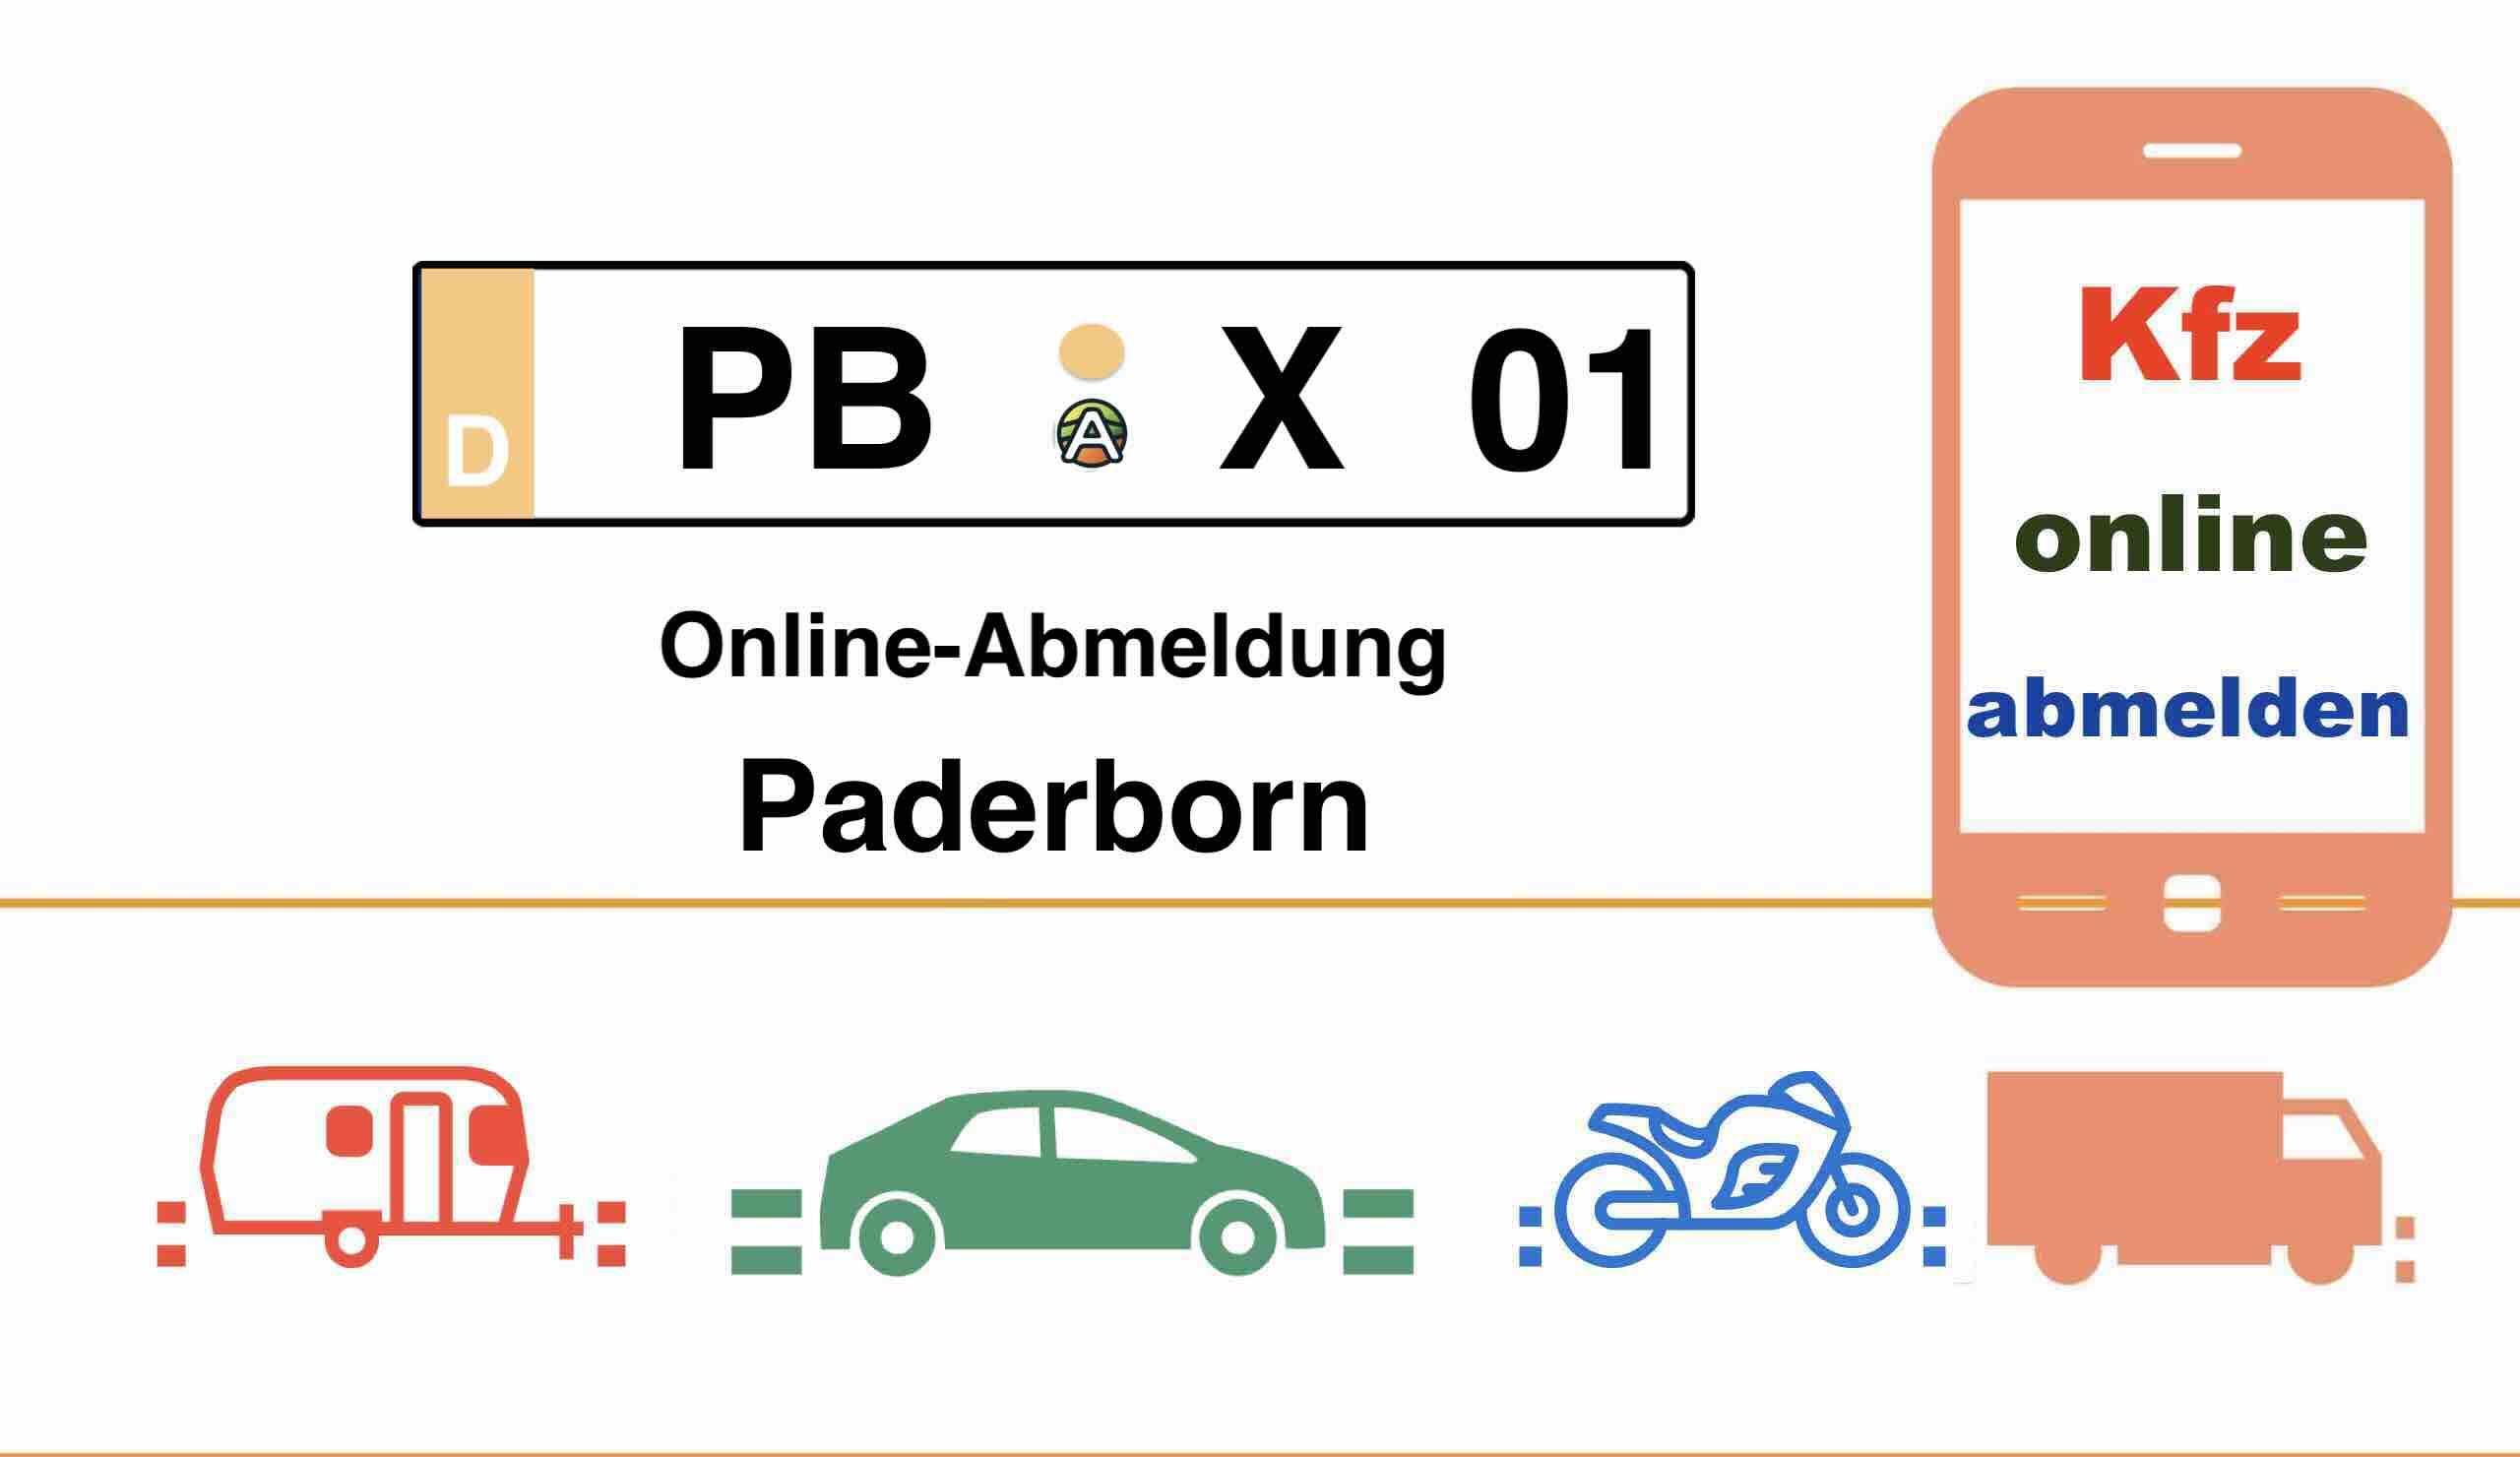 Online-Abmeldung im Kreis Paderborn 